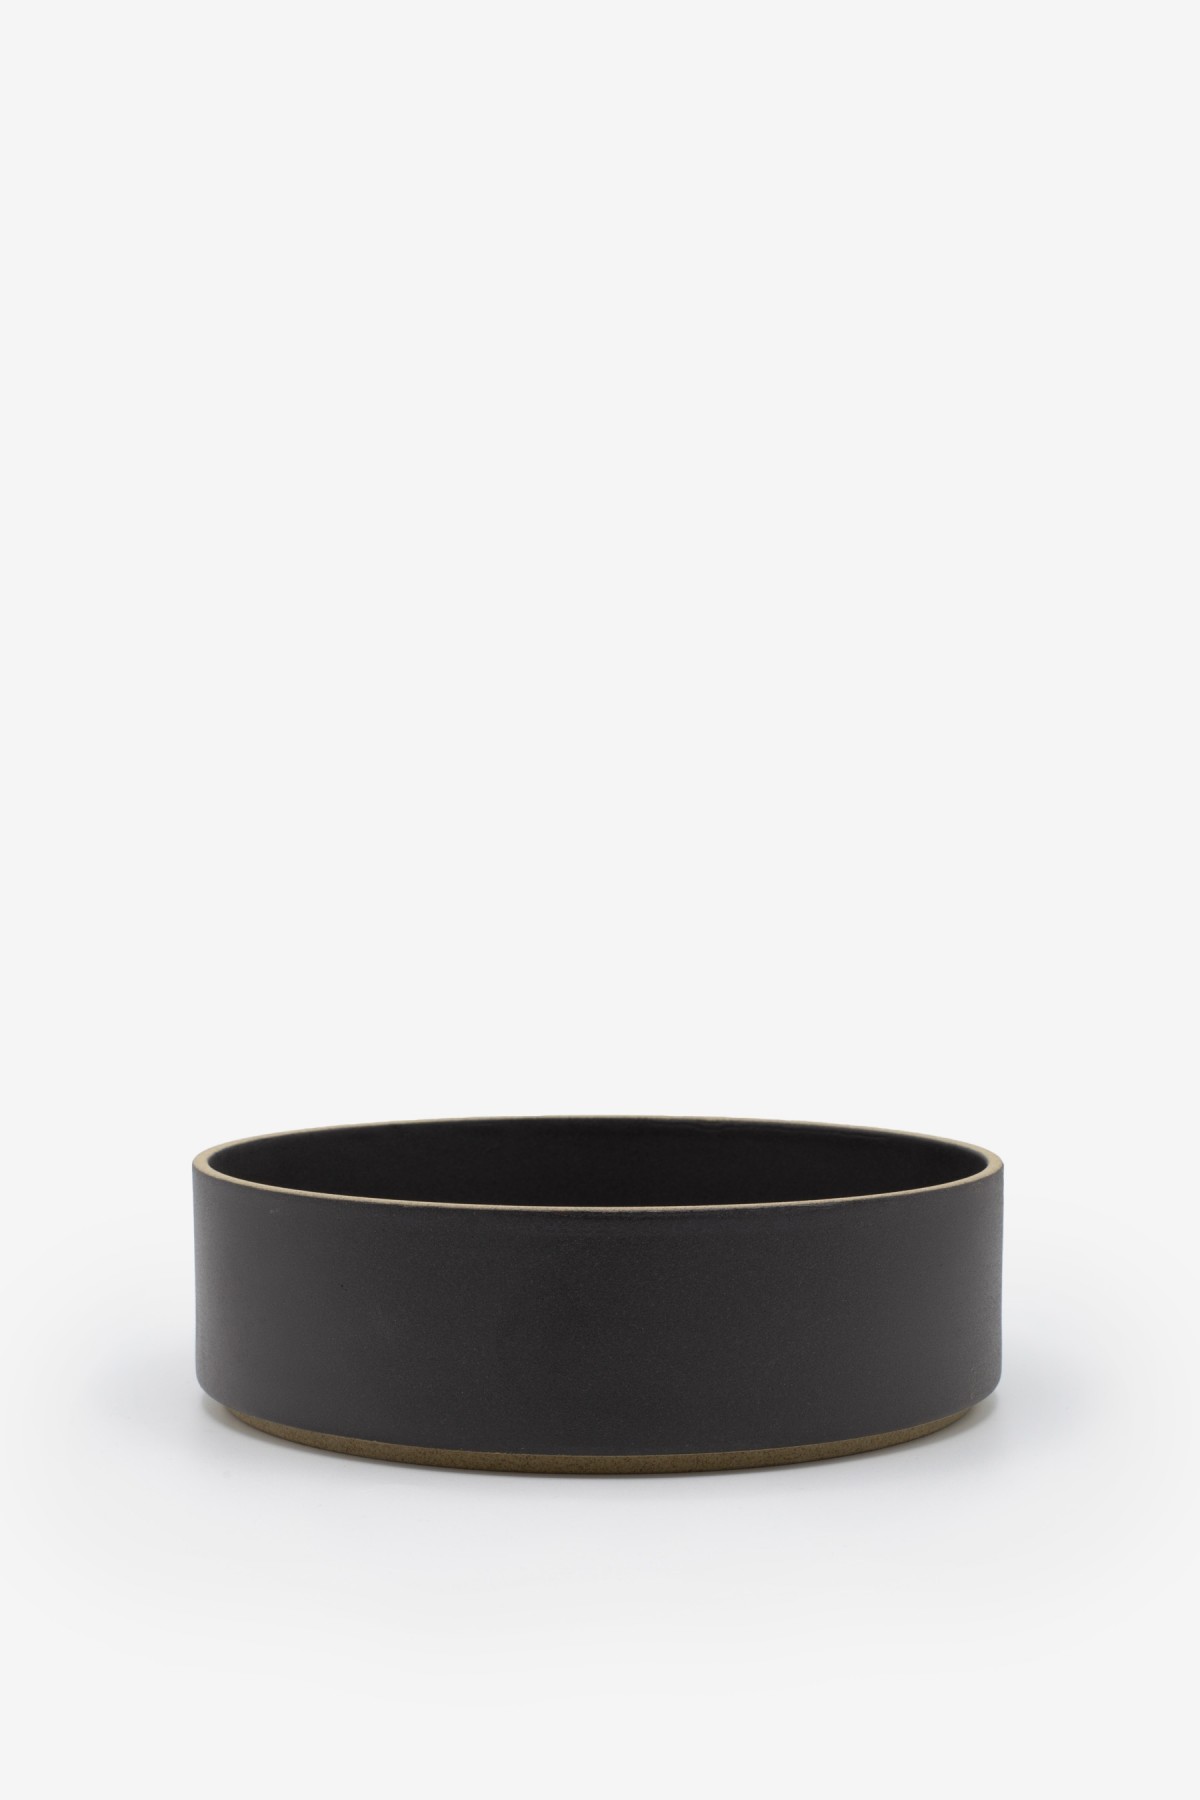 Hasami Porcelain Bowl 185x55 in Black